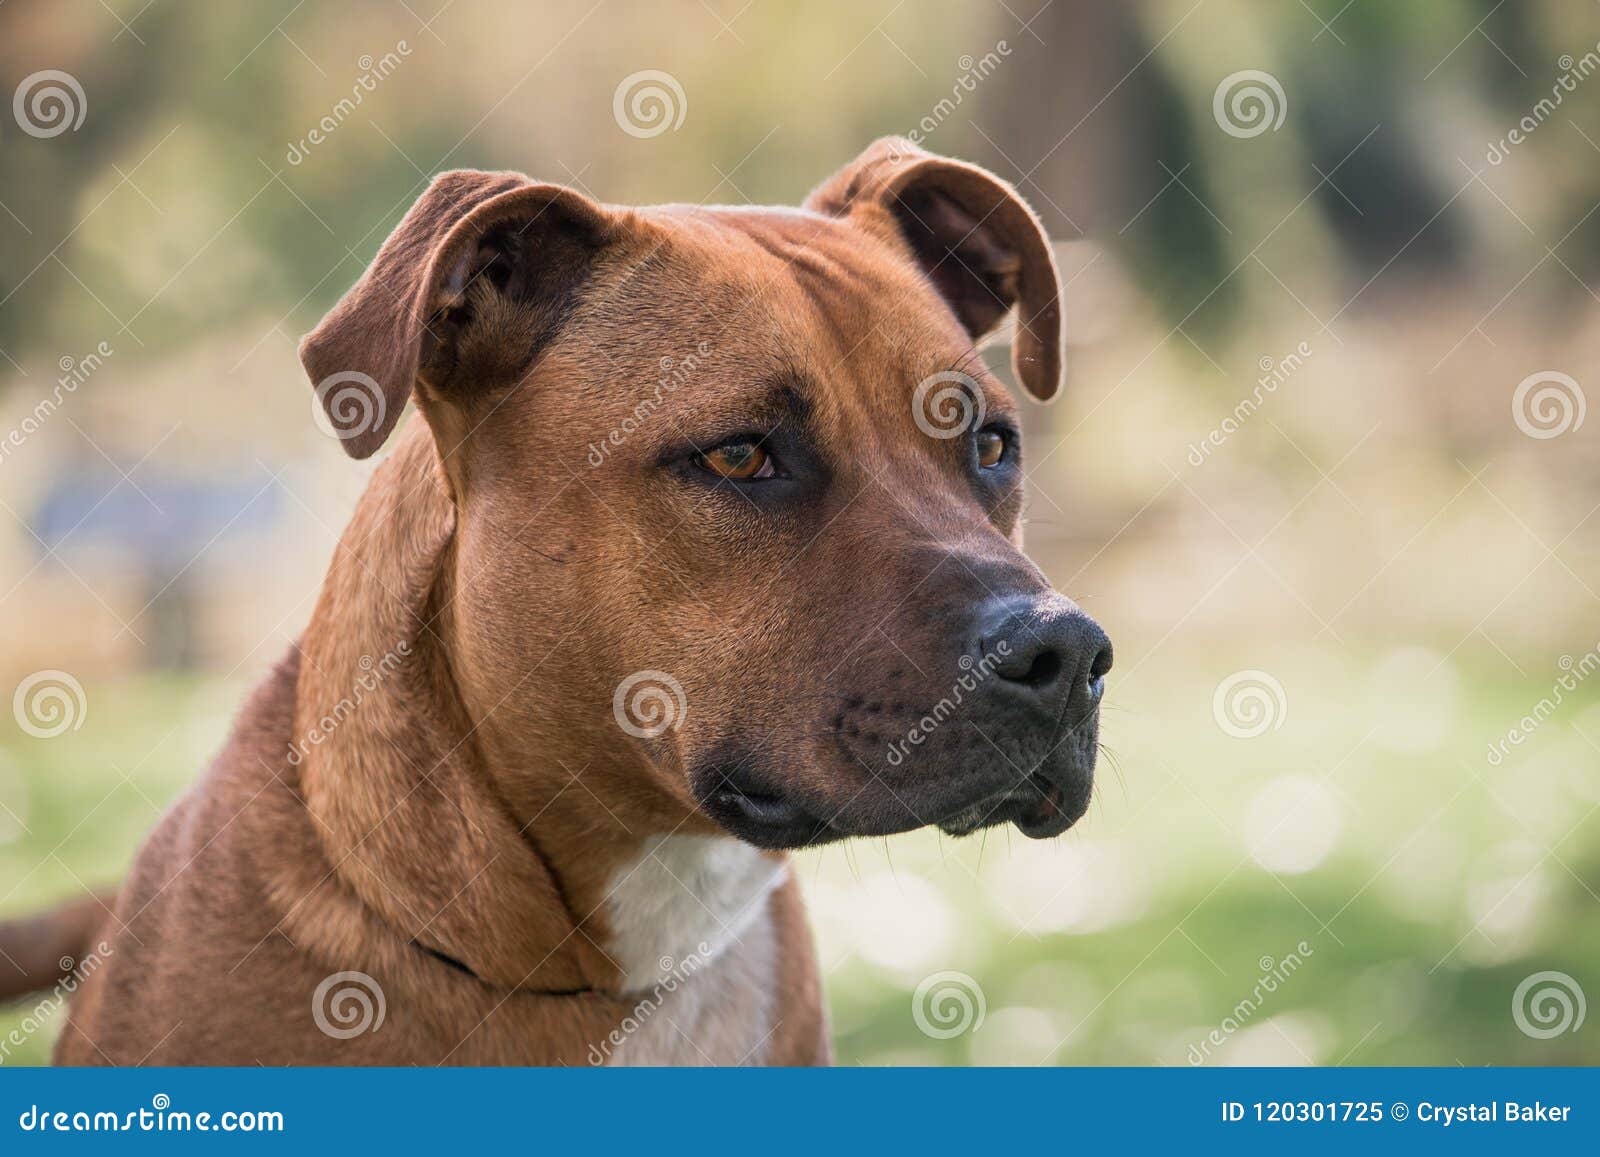 Staffy Breed Dog Close Up Stock Image Image Of Fetch 120301725